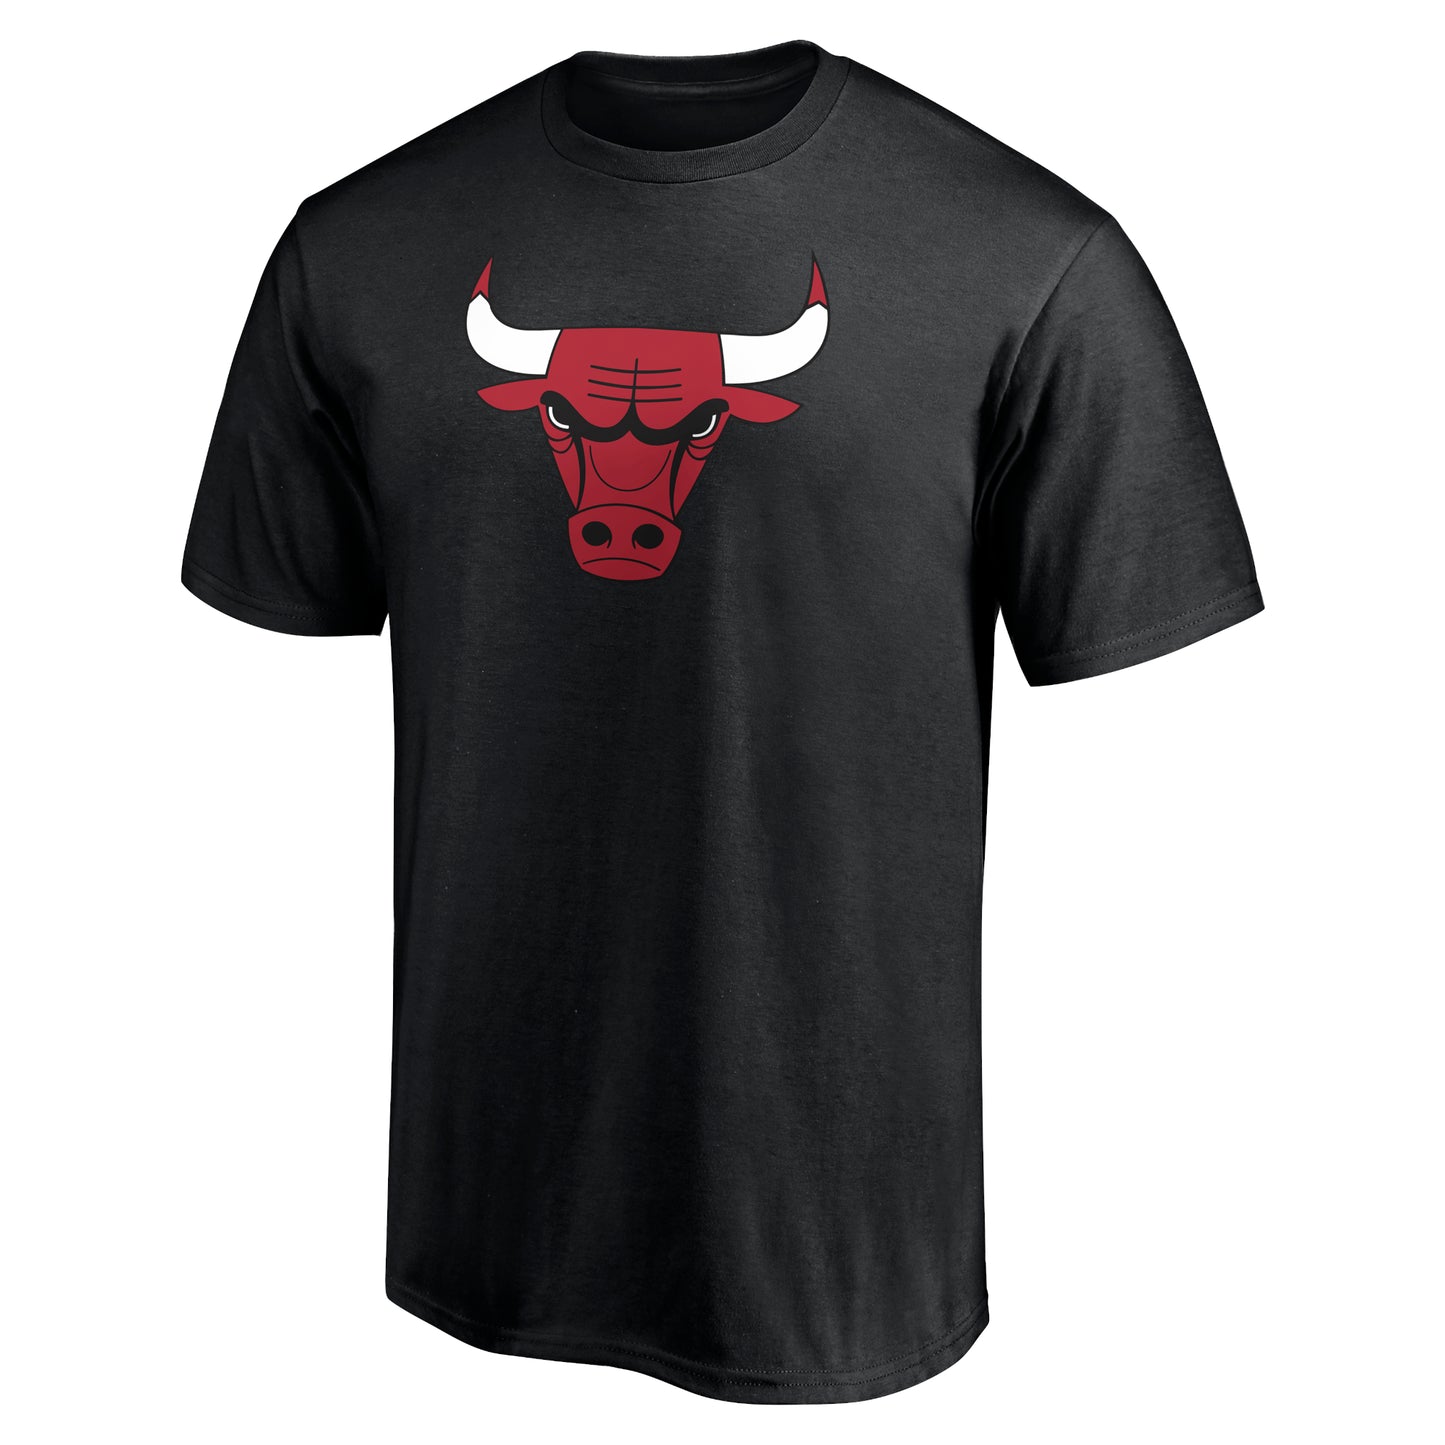 Zach Lavine Chicago Bulls Adult T-Shirt